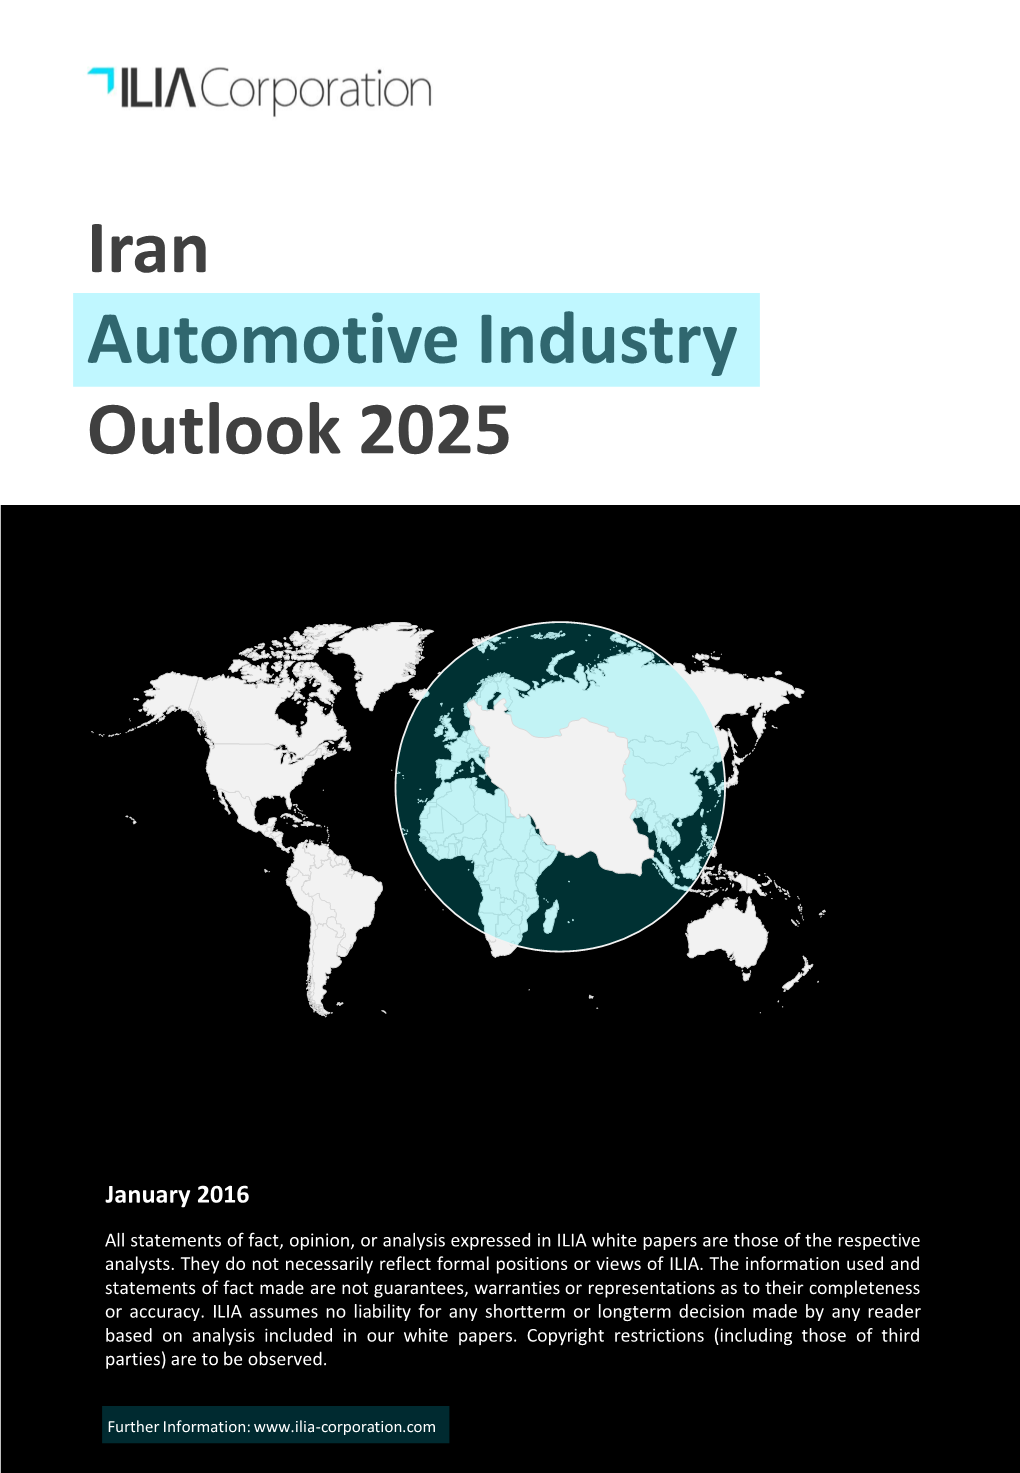 Iran Automotive Industry Outlook 2025